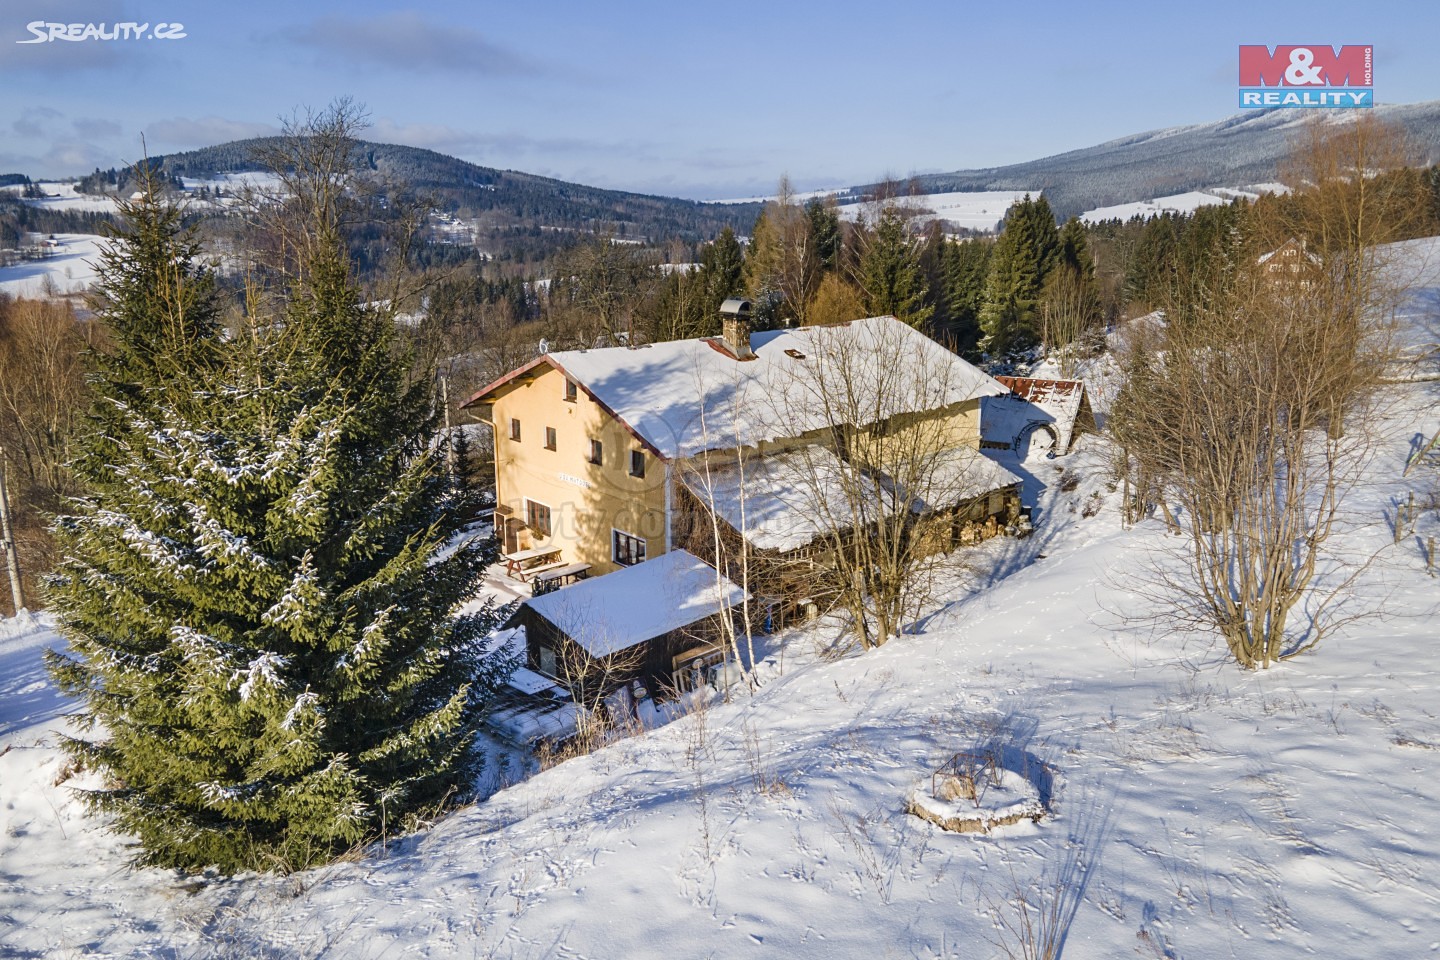 Prodej  rodinného domu 431 m², pozemek 3 508 m², Deštné v Orlických horách, okres Rychnov nad Kněžnou